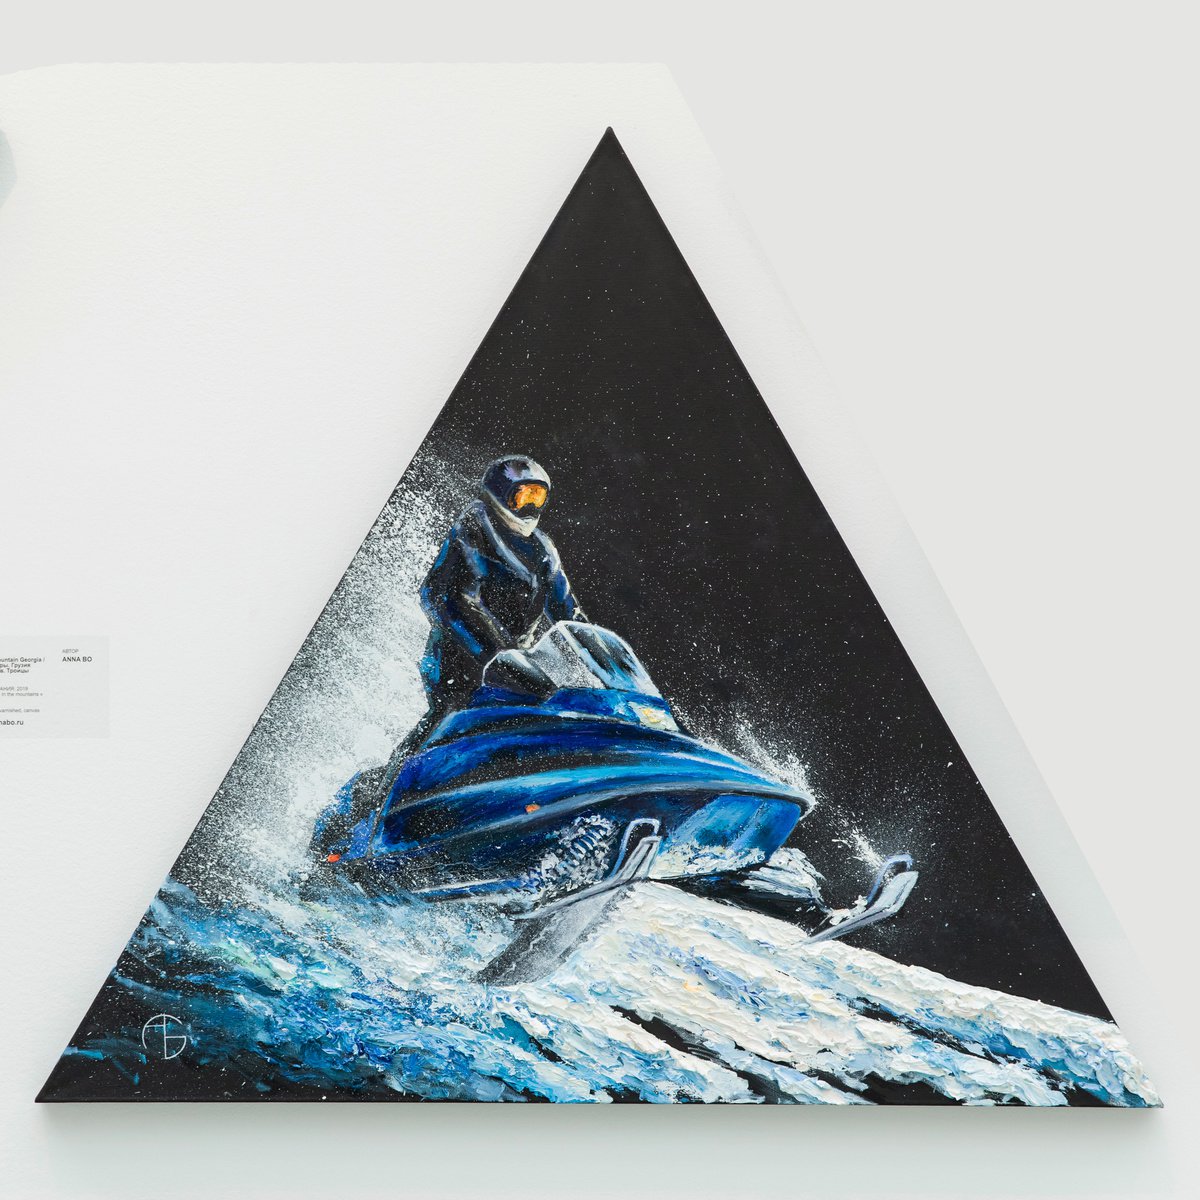 SPEED / black / triangle / sport / snow / mountains / ski by Anna Bo